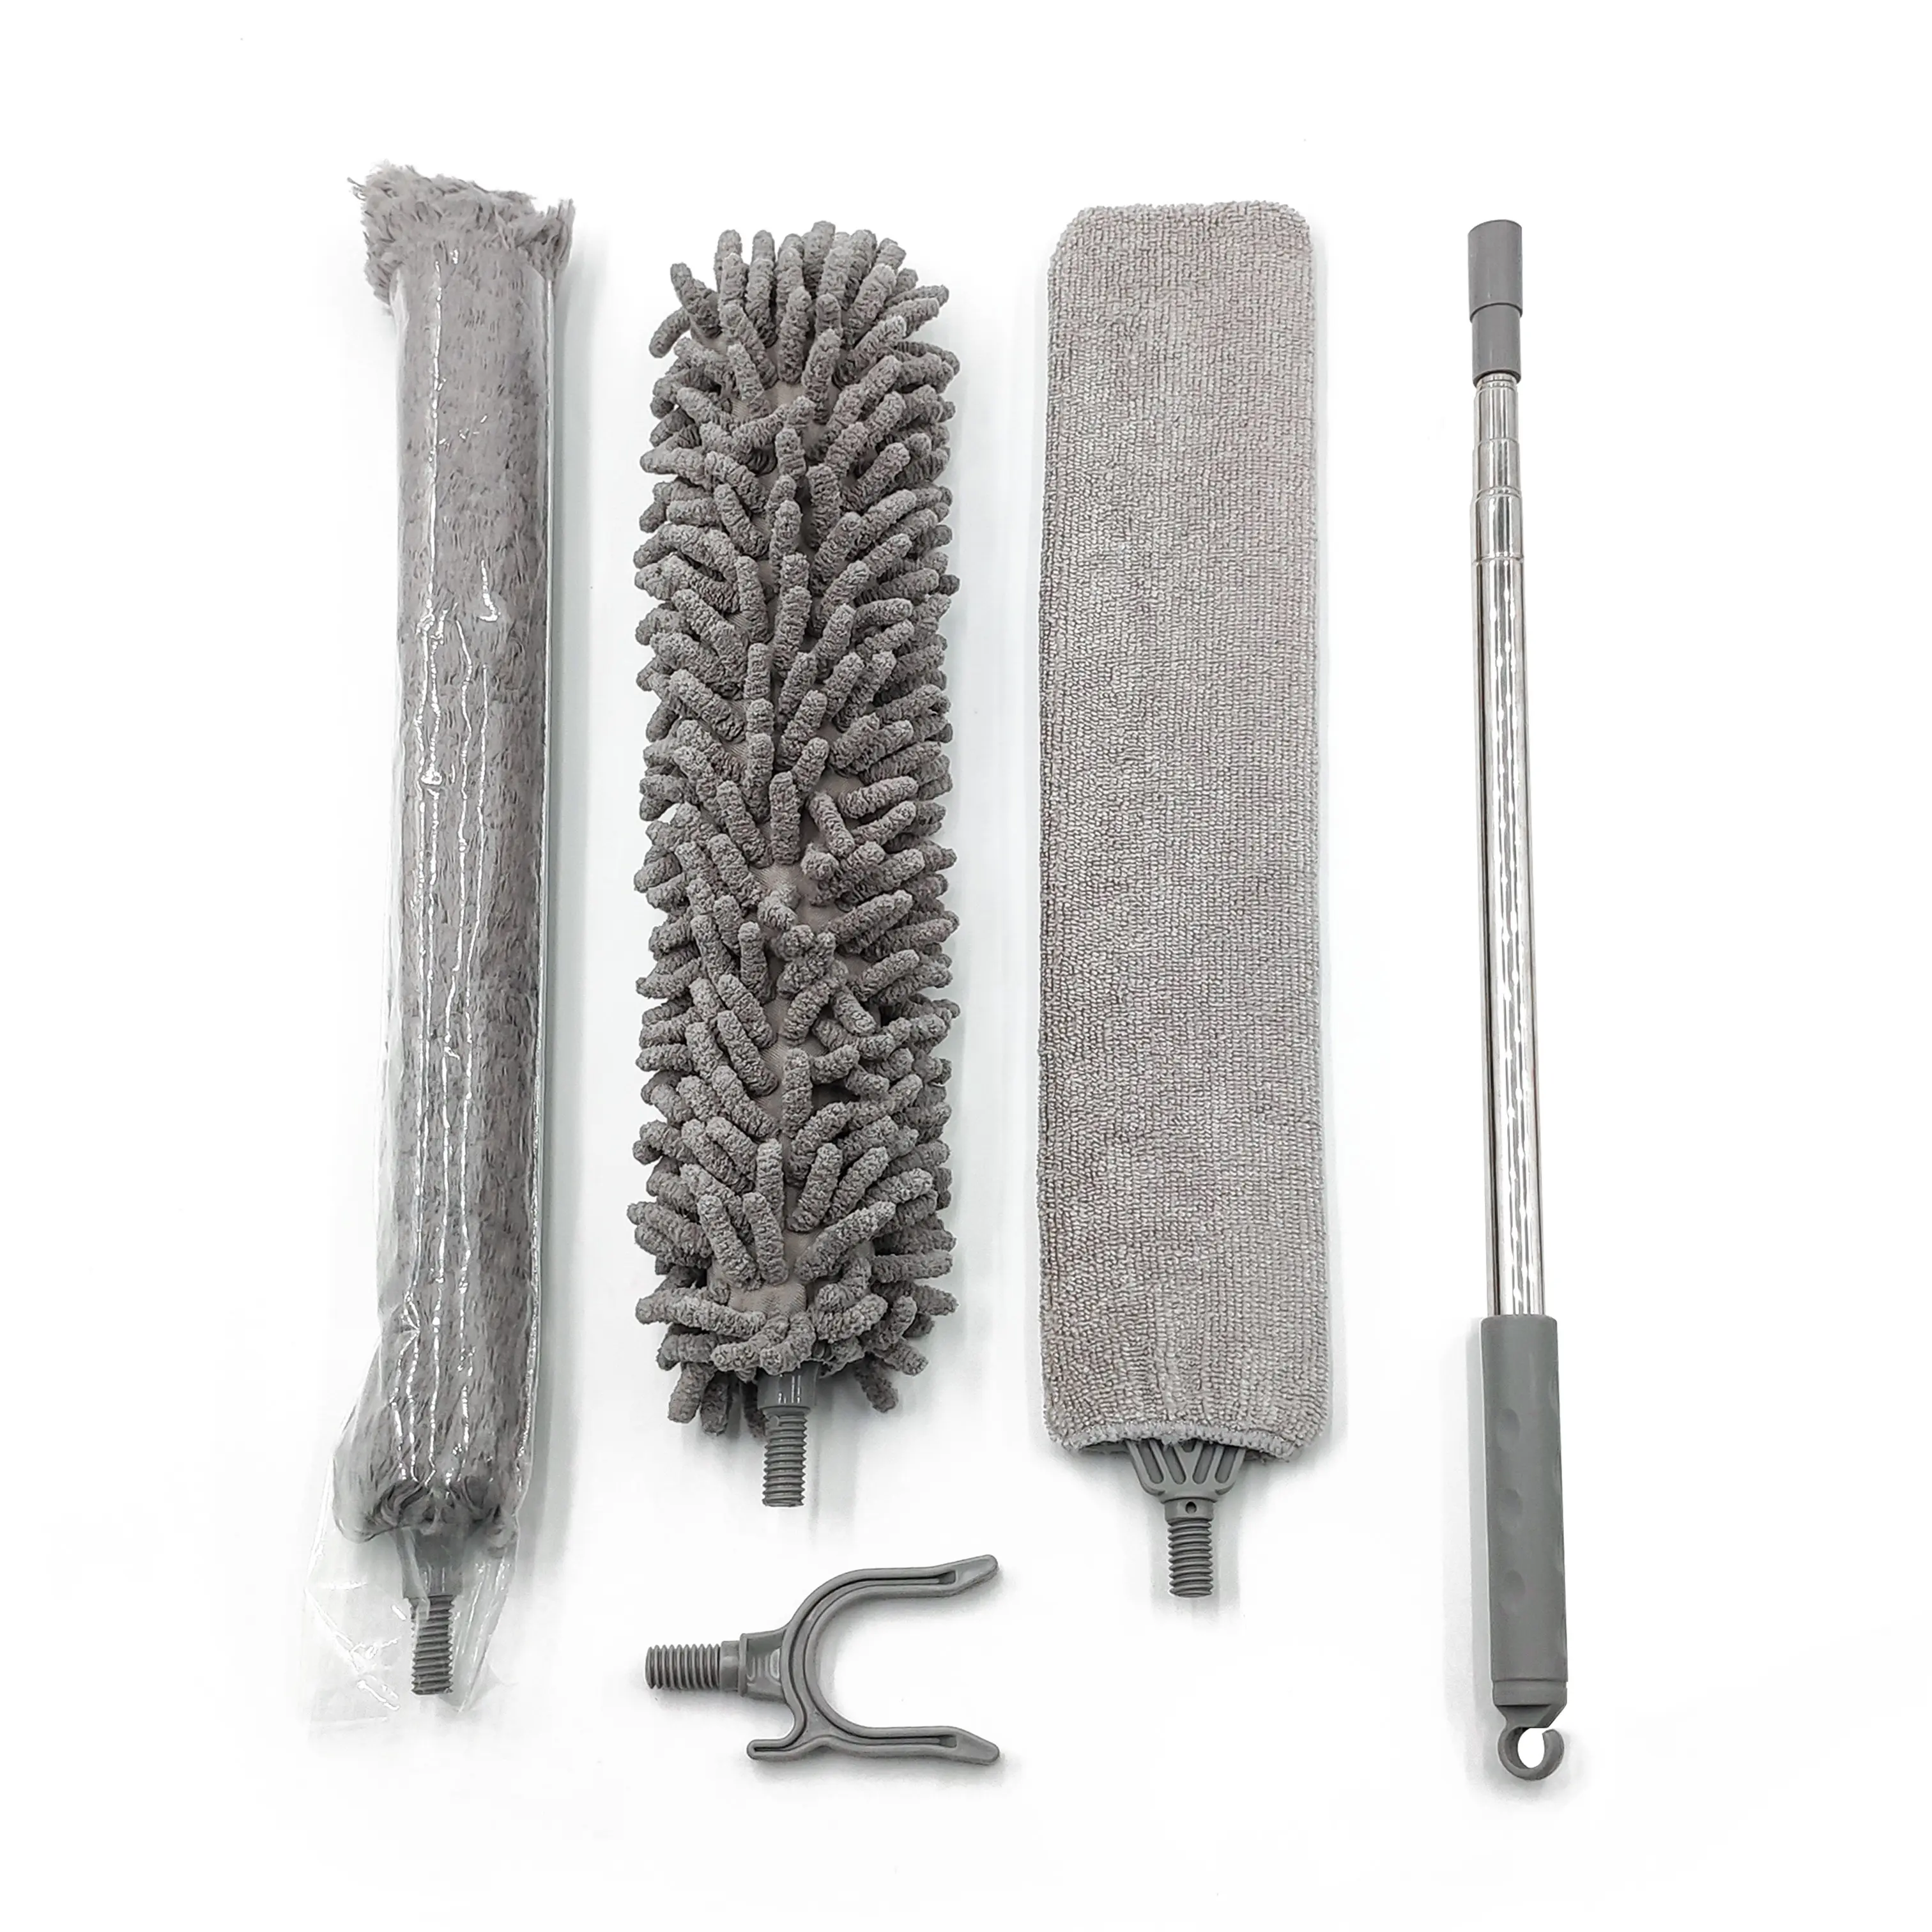 telescopic long handle extendable pole microfiber car duster cleaning kit set